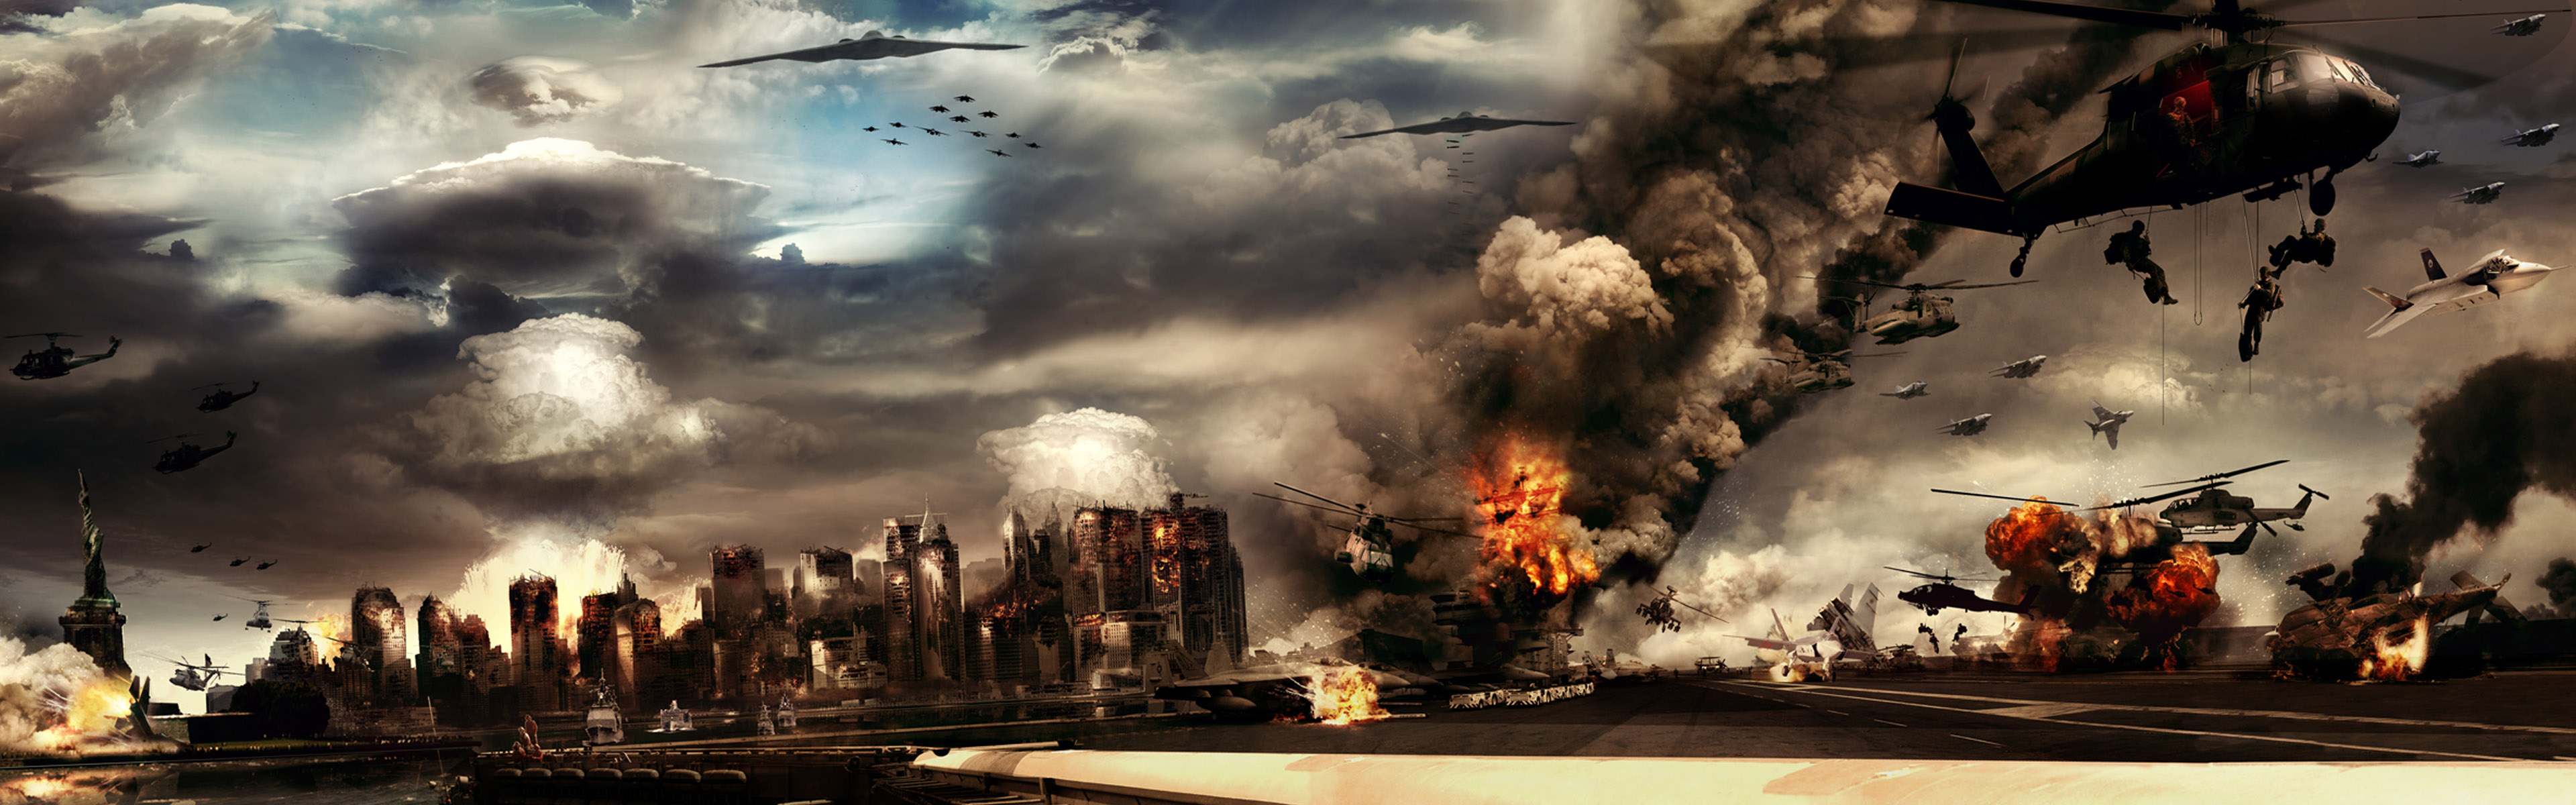 helicopters, explosions, destruction, Statue of Liberty, action, widescreen - desktop wallpaper